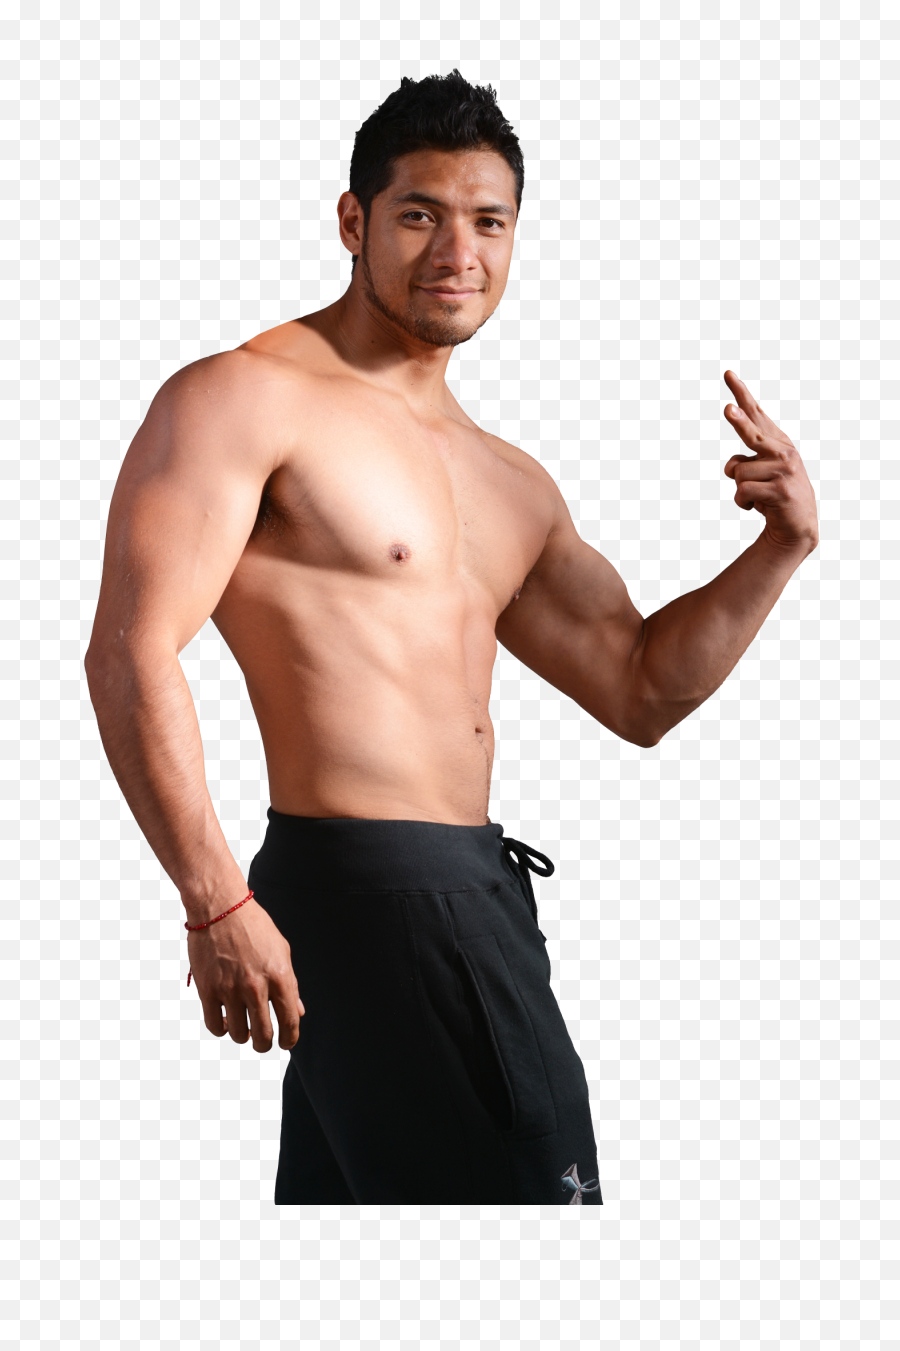 Man Fitness Png Transparent Image - Pngpix Male Model In Transparent,Guy Png